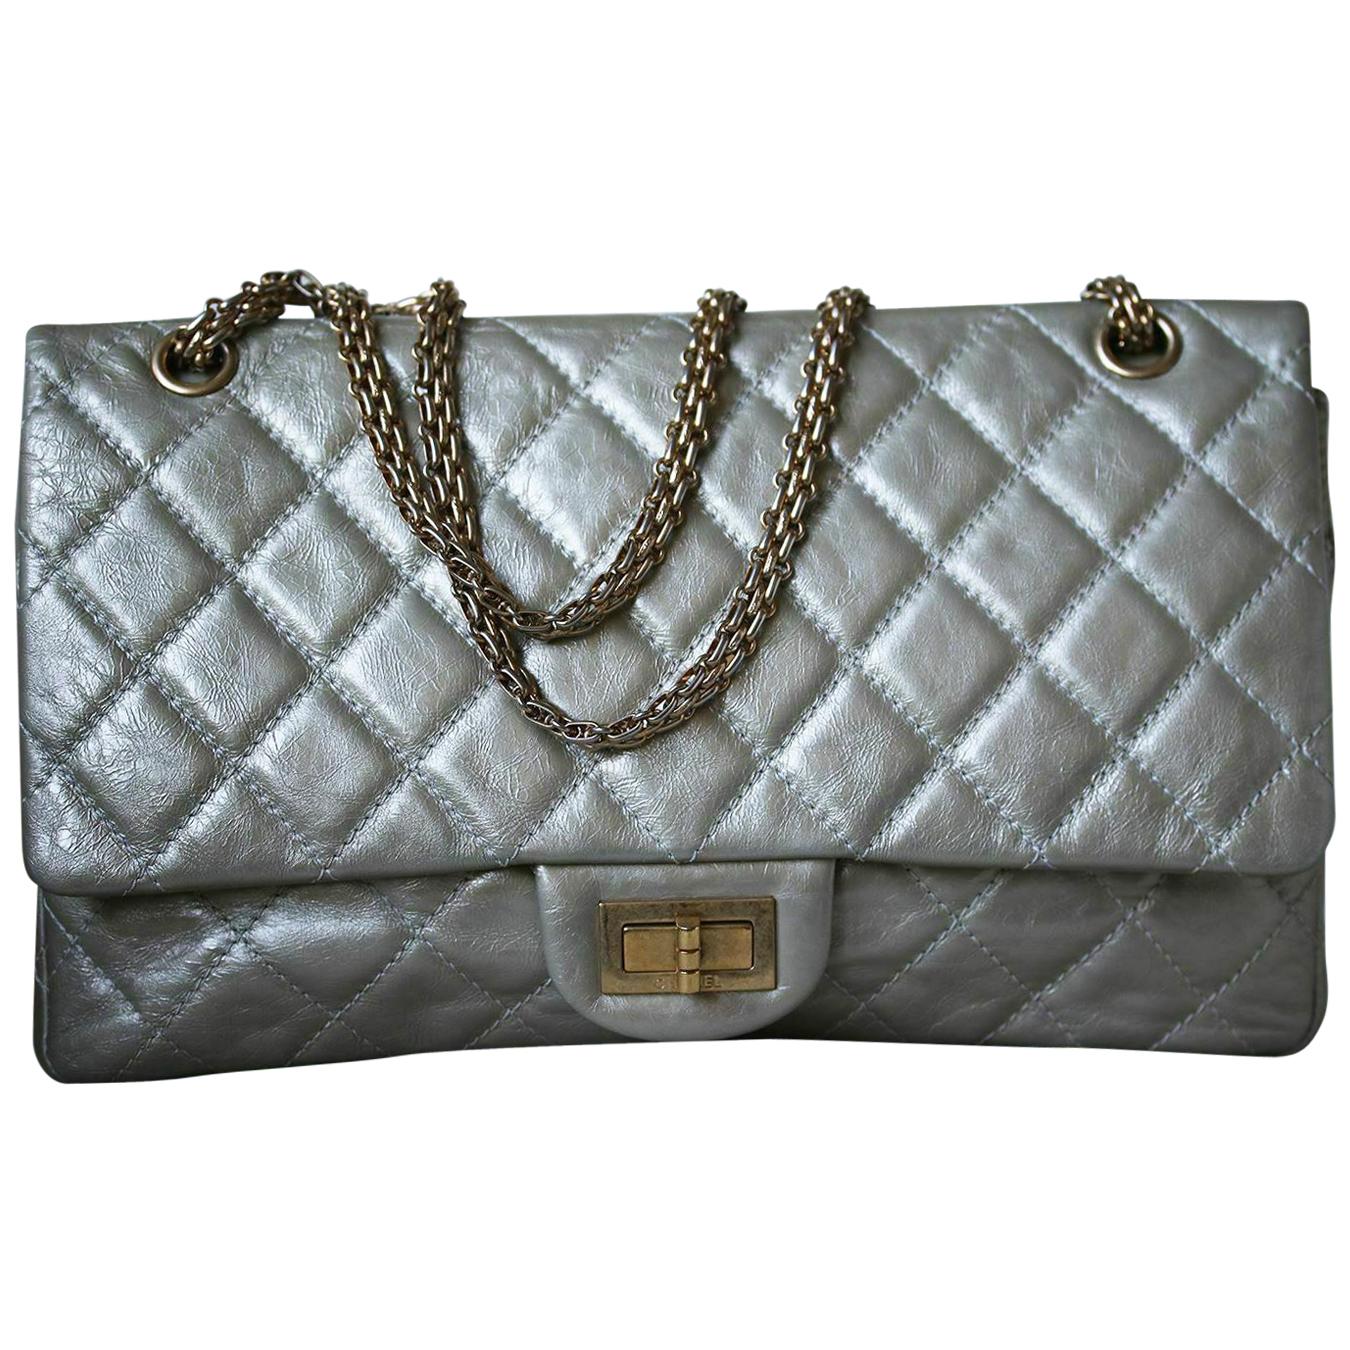 Chanel 2.55 Reissue Metallic Calfskin Quilted Flap Bag